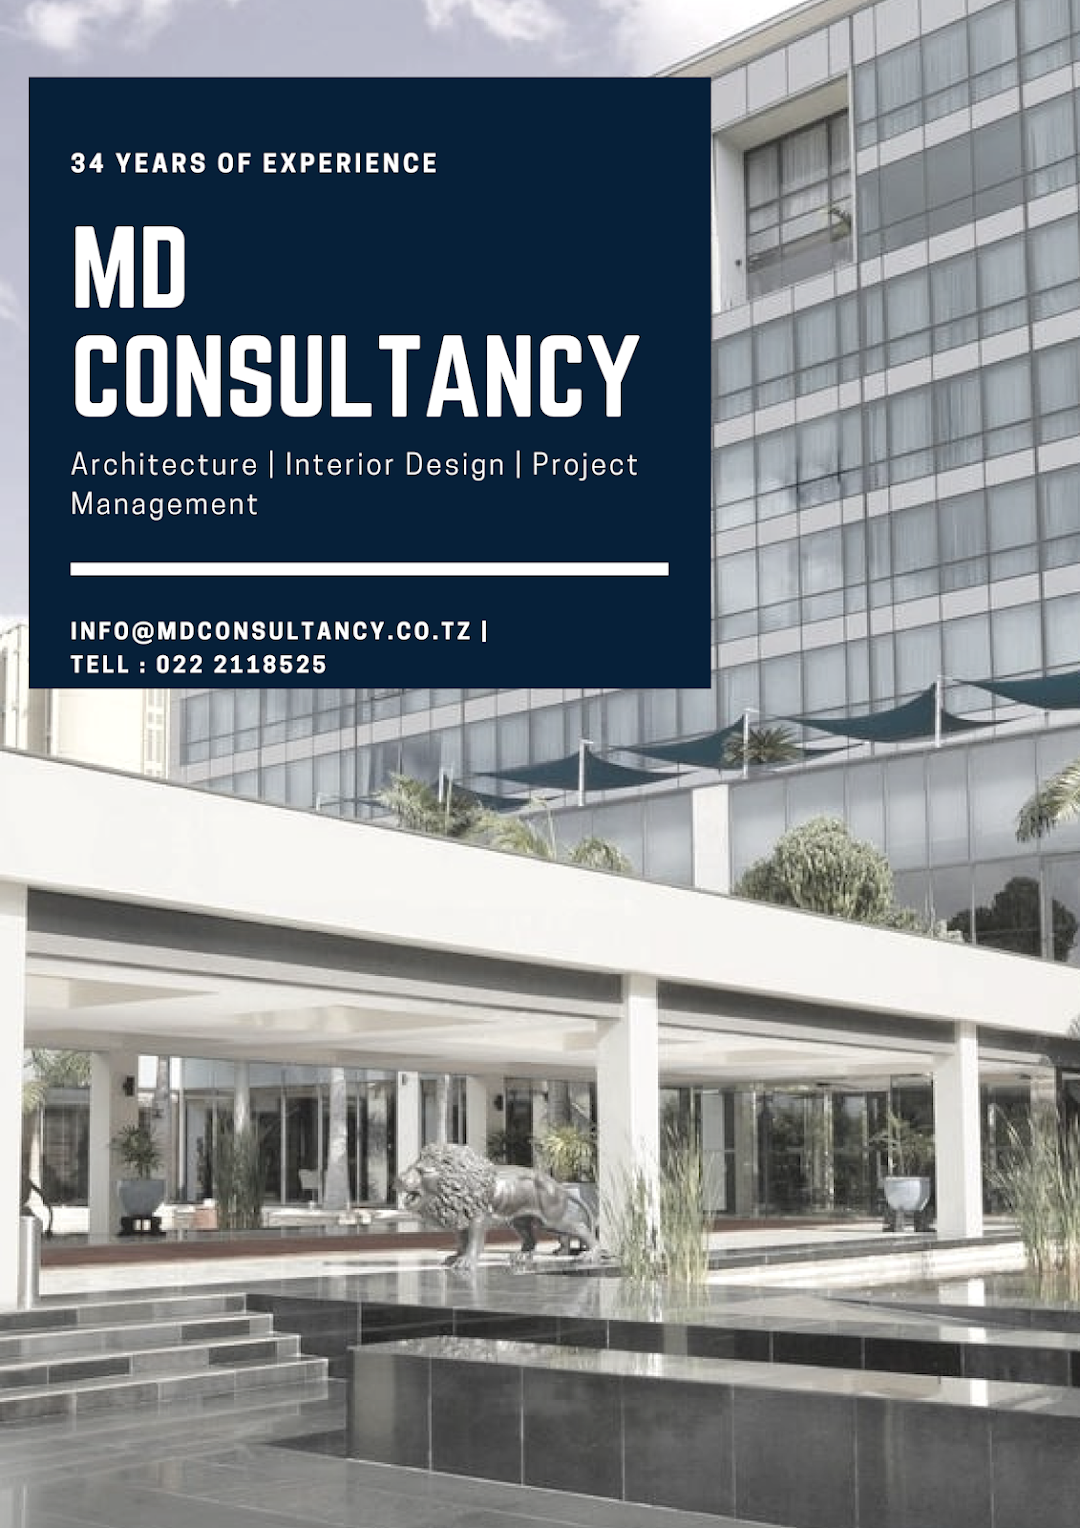 MD Consultancy Ltd